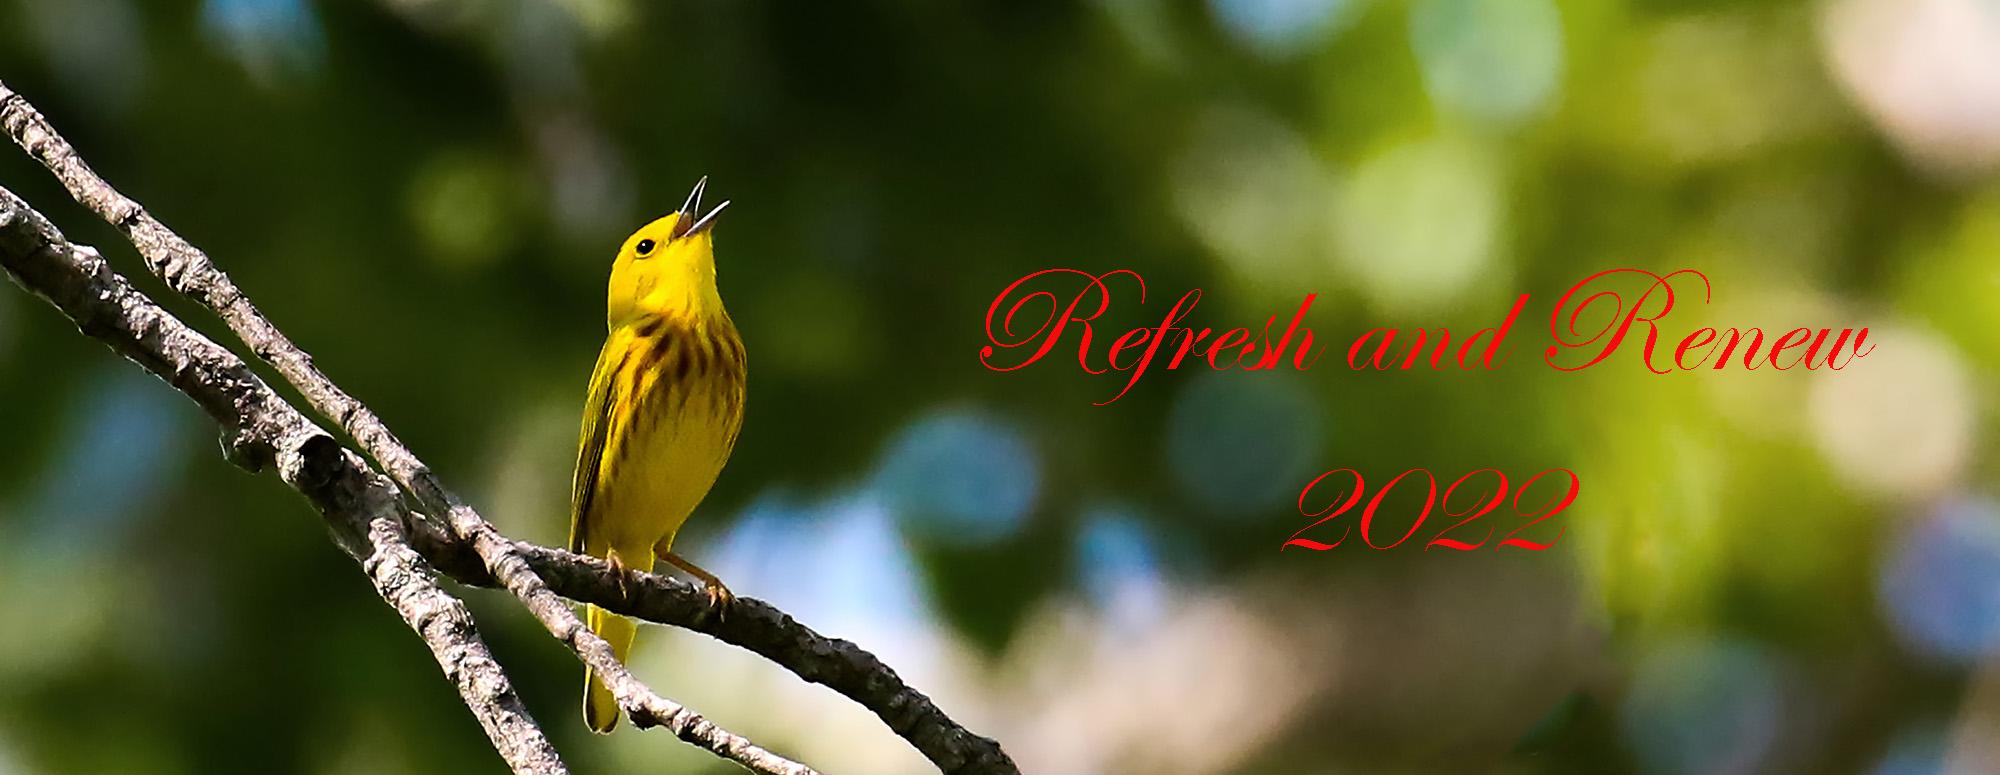 Warbler singing Refresh and Renew 2022